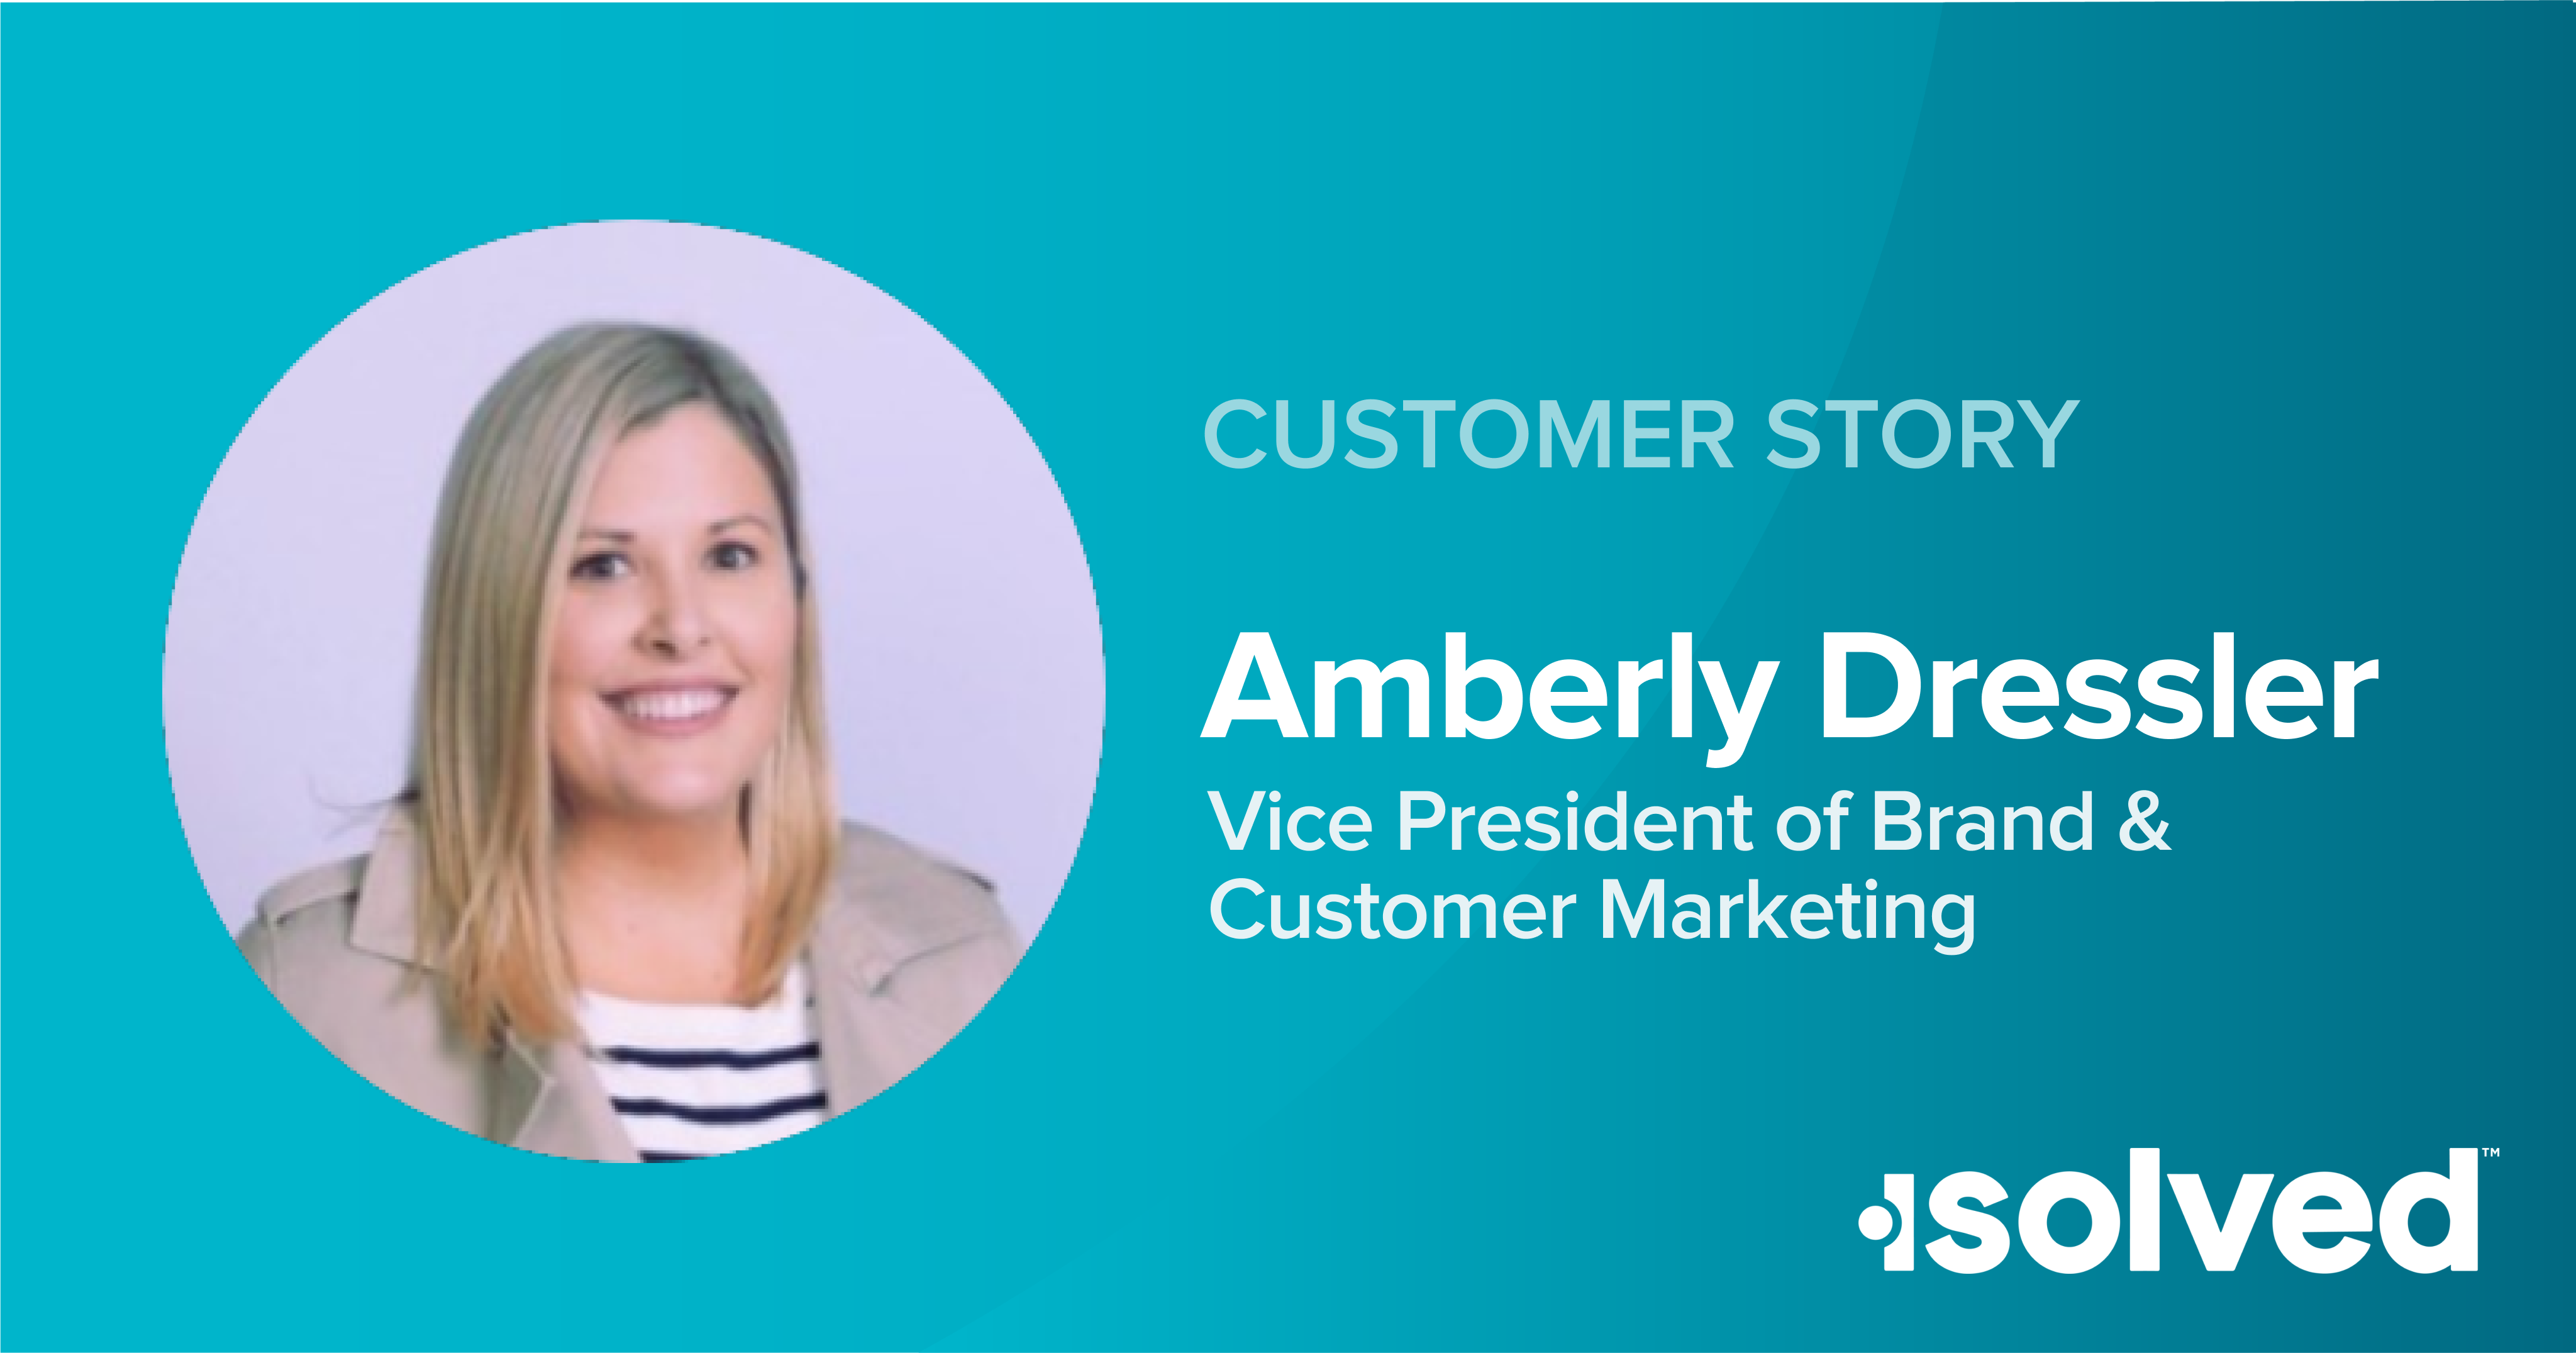 Story by Amberly Dressler, Vice President of Brand & Customer Marketing, isolved